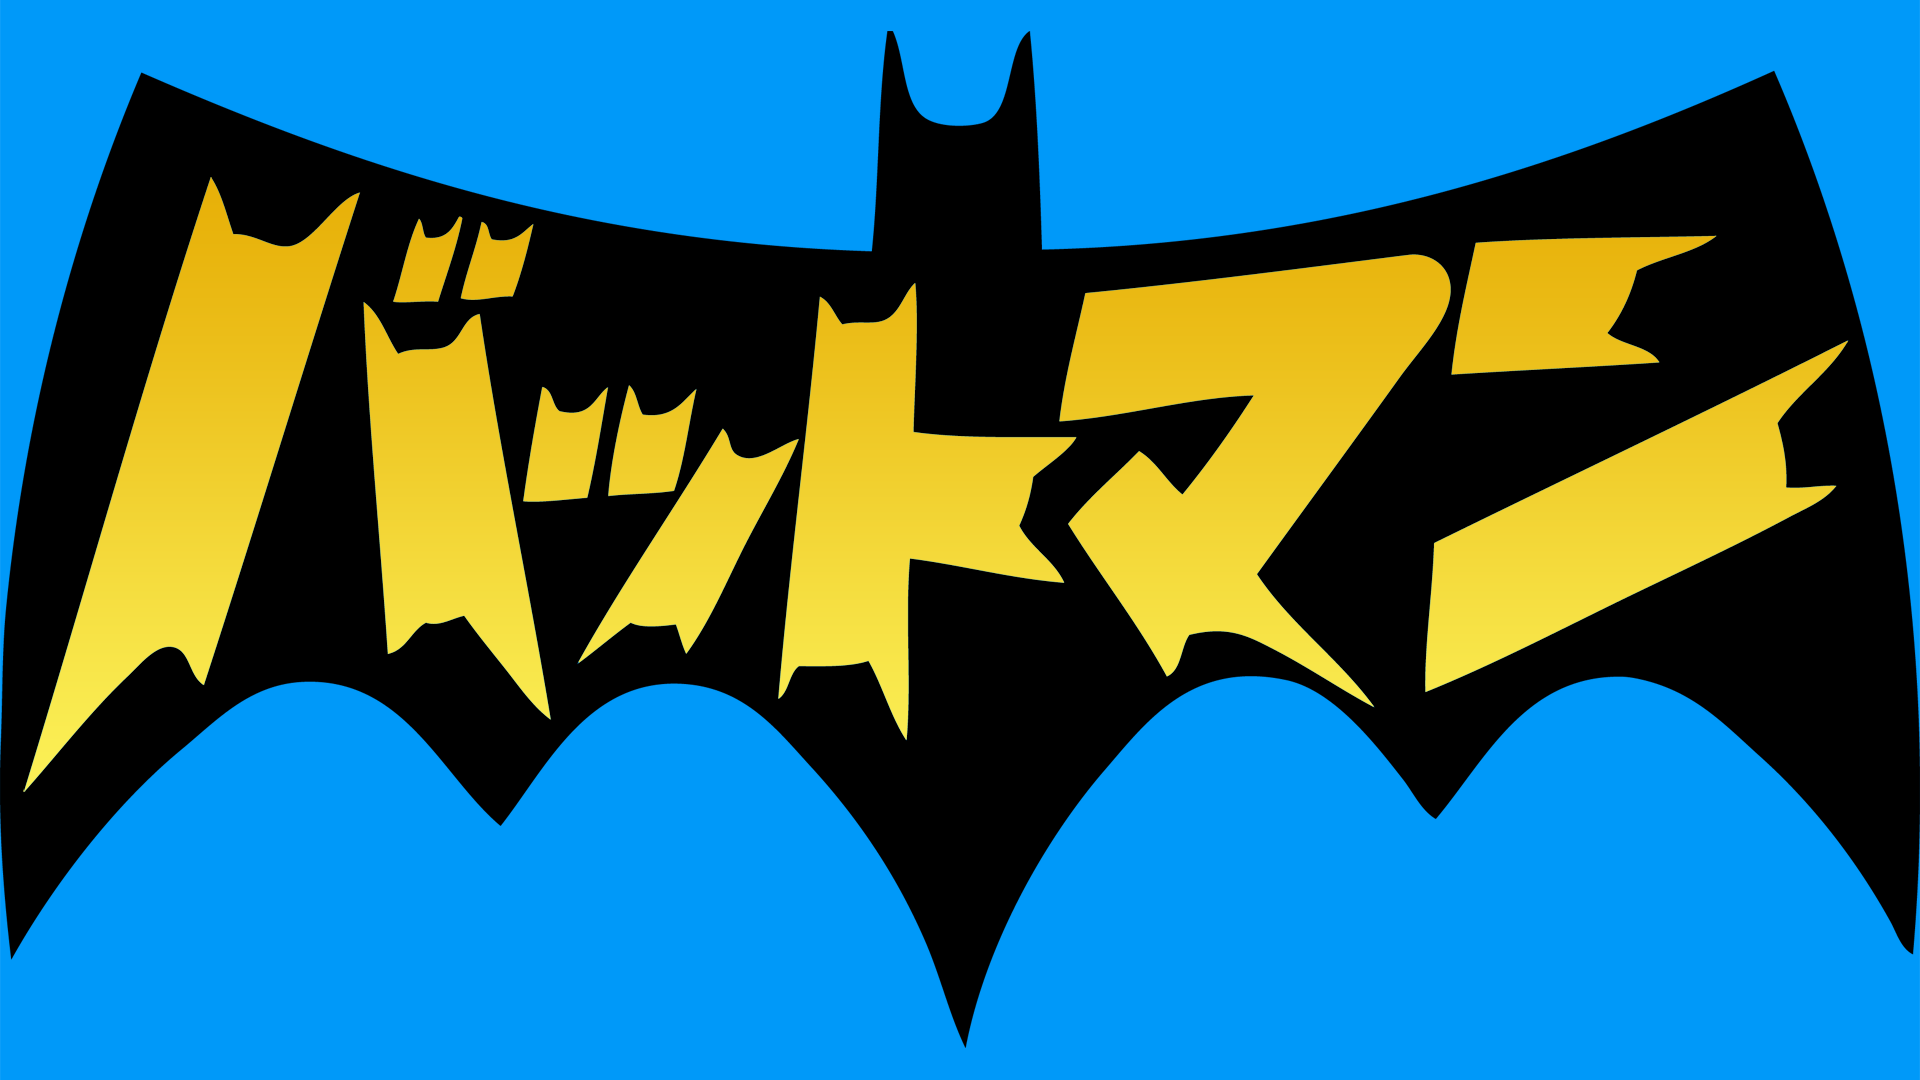 Бэтмен на английском языке. Бэтмен без фона. Batman 1997 logo. Бэтмен на английском. Бэтмен комикс лого.